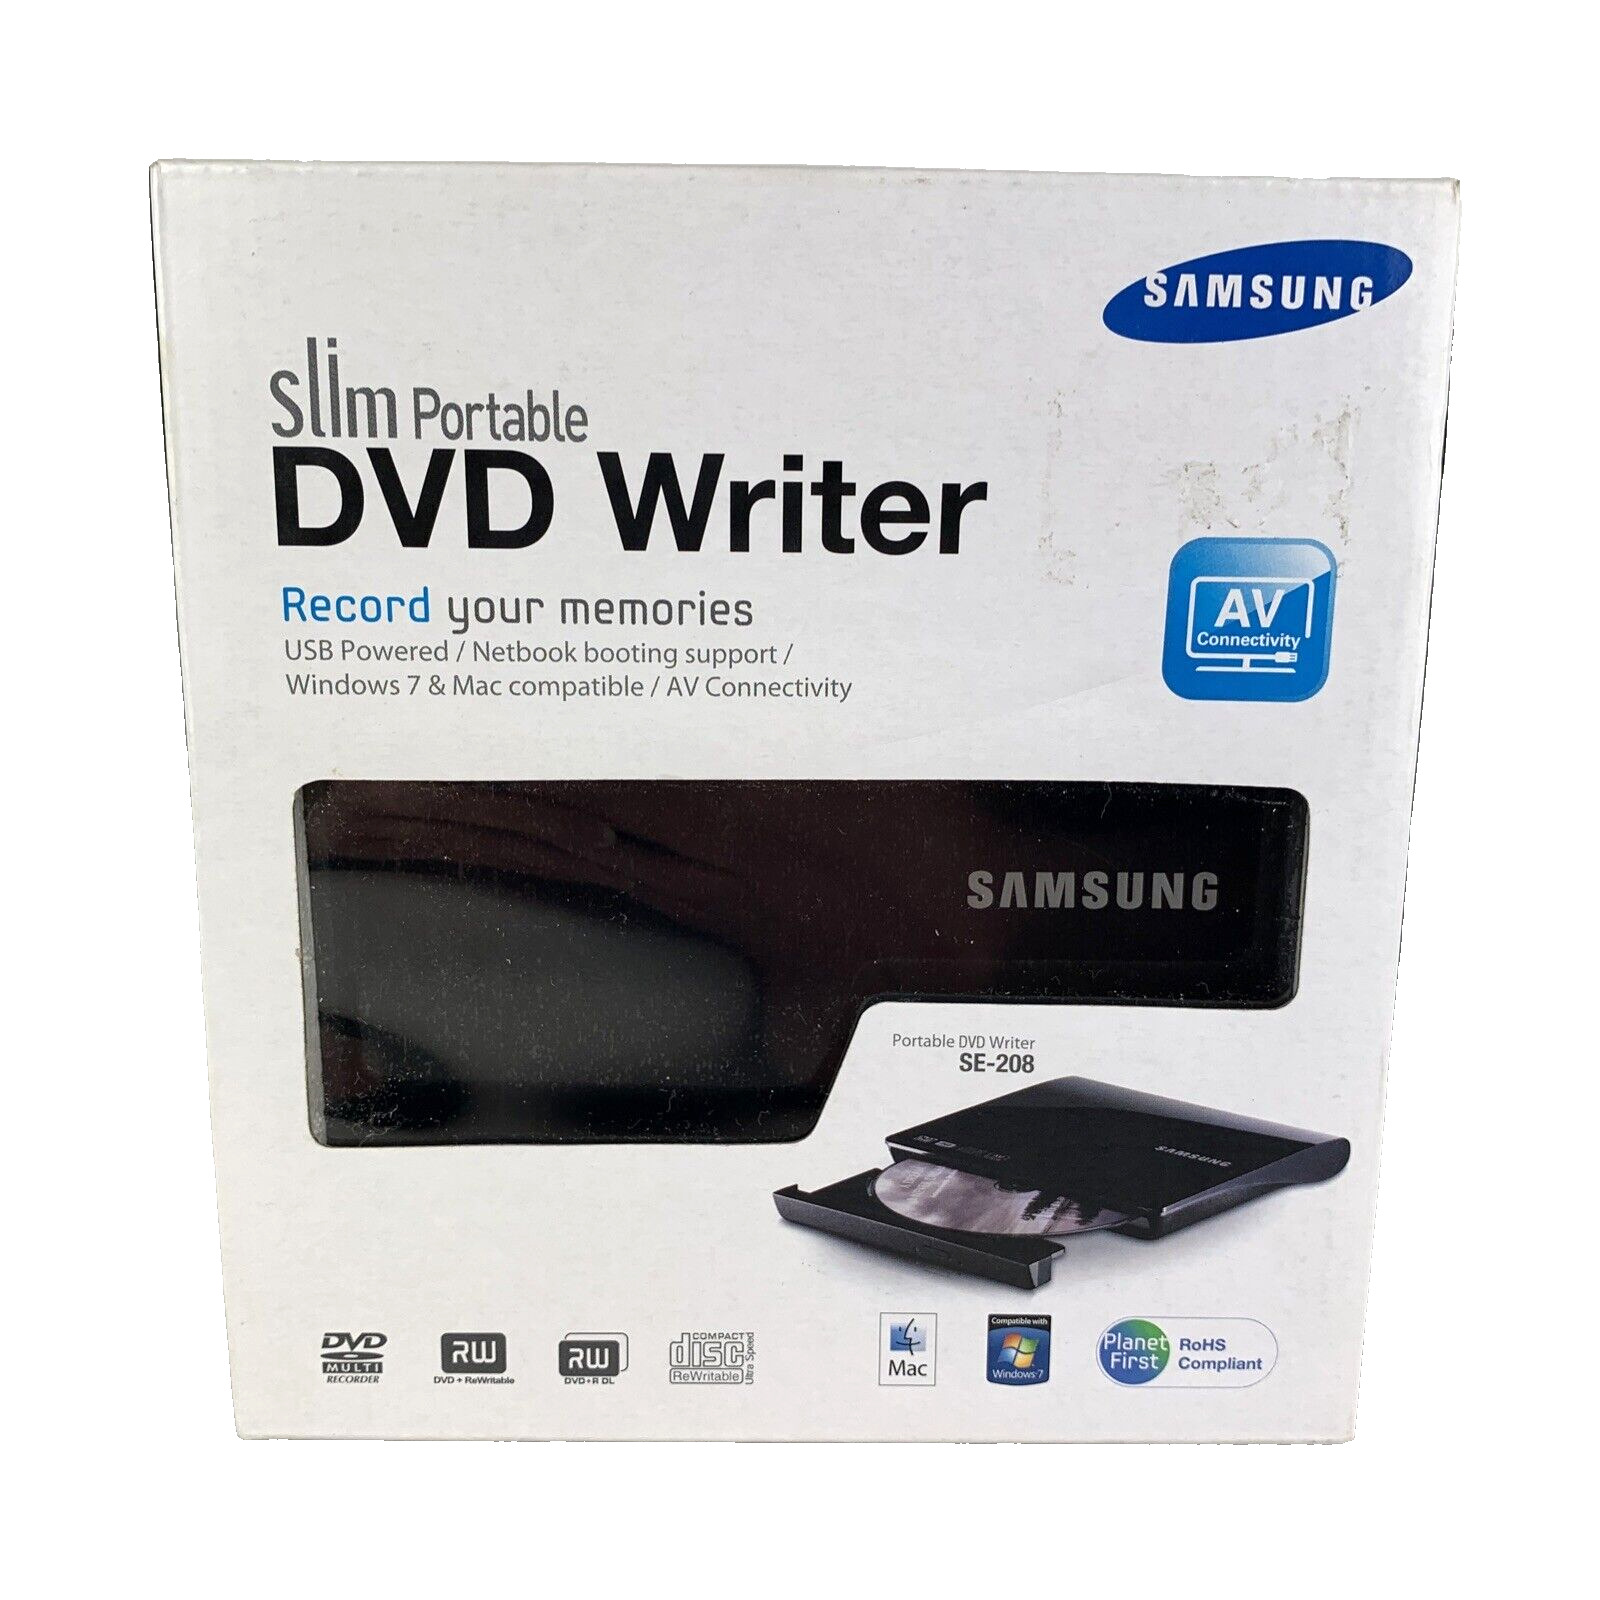 NOS Samsung DVD-RW External Portable Slim USB Writer SE-208 Burner DVD Z1